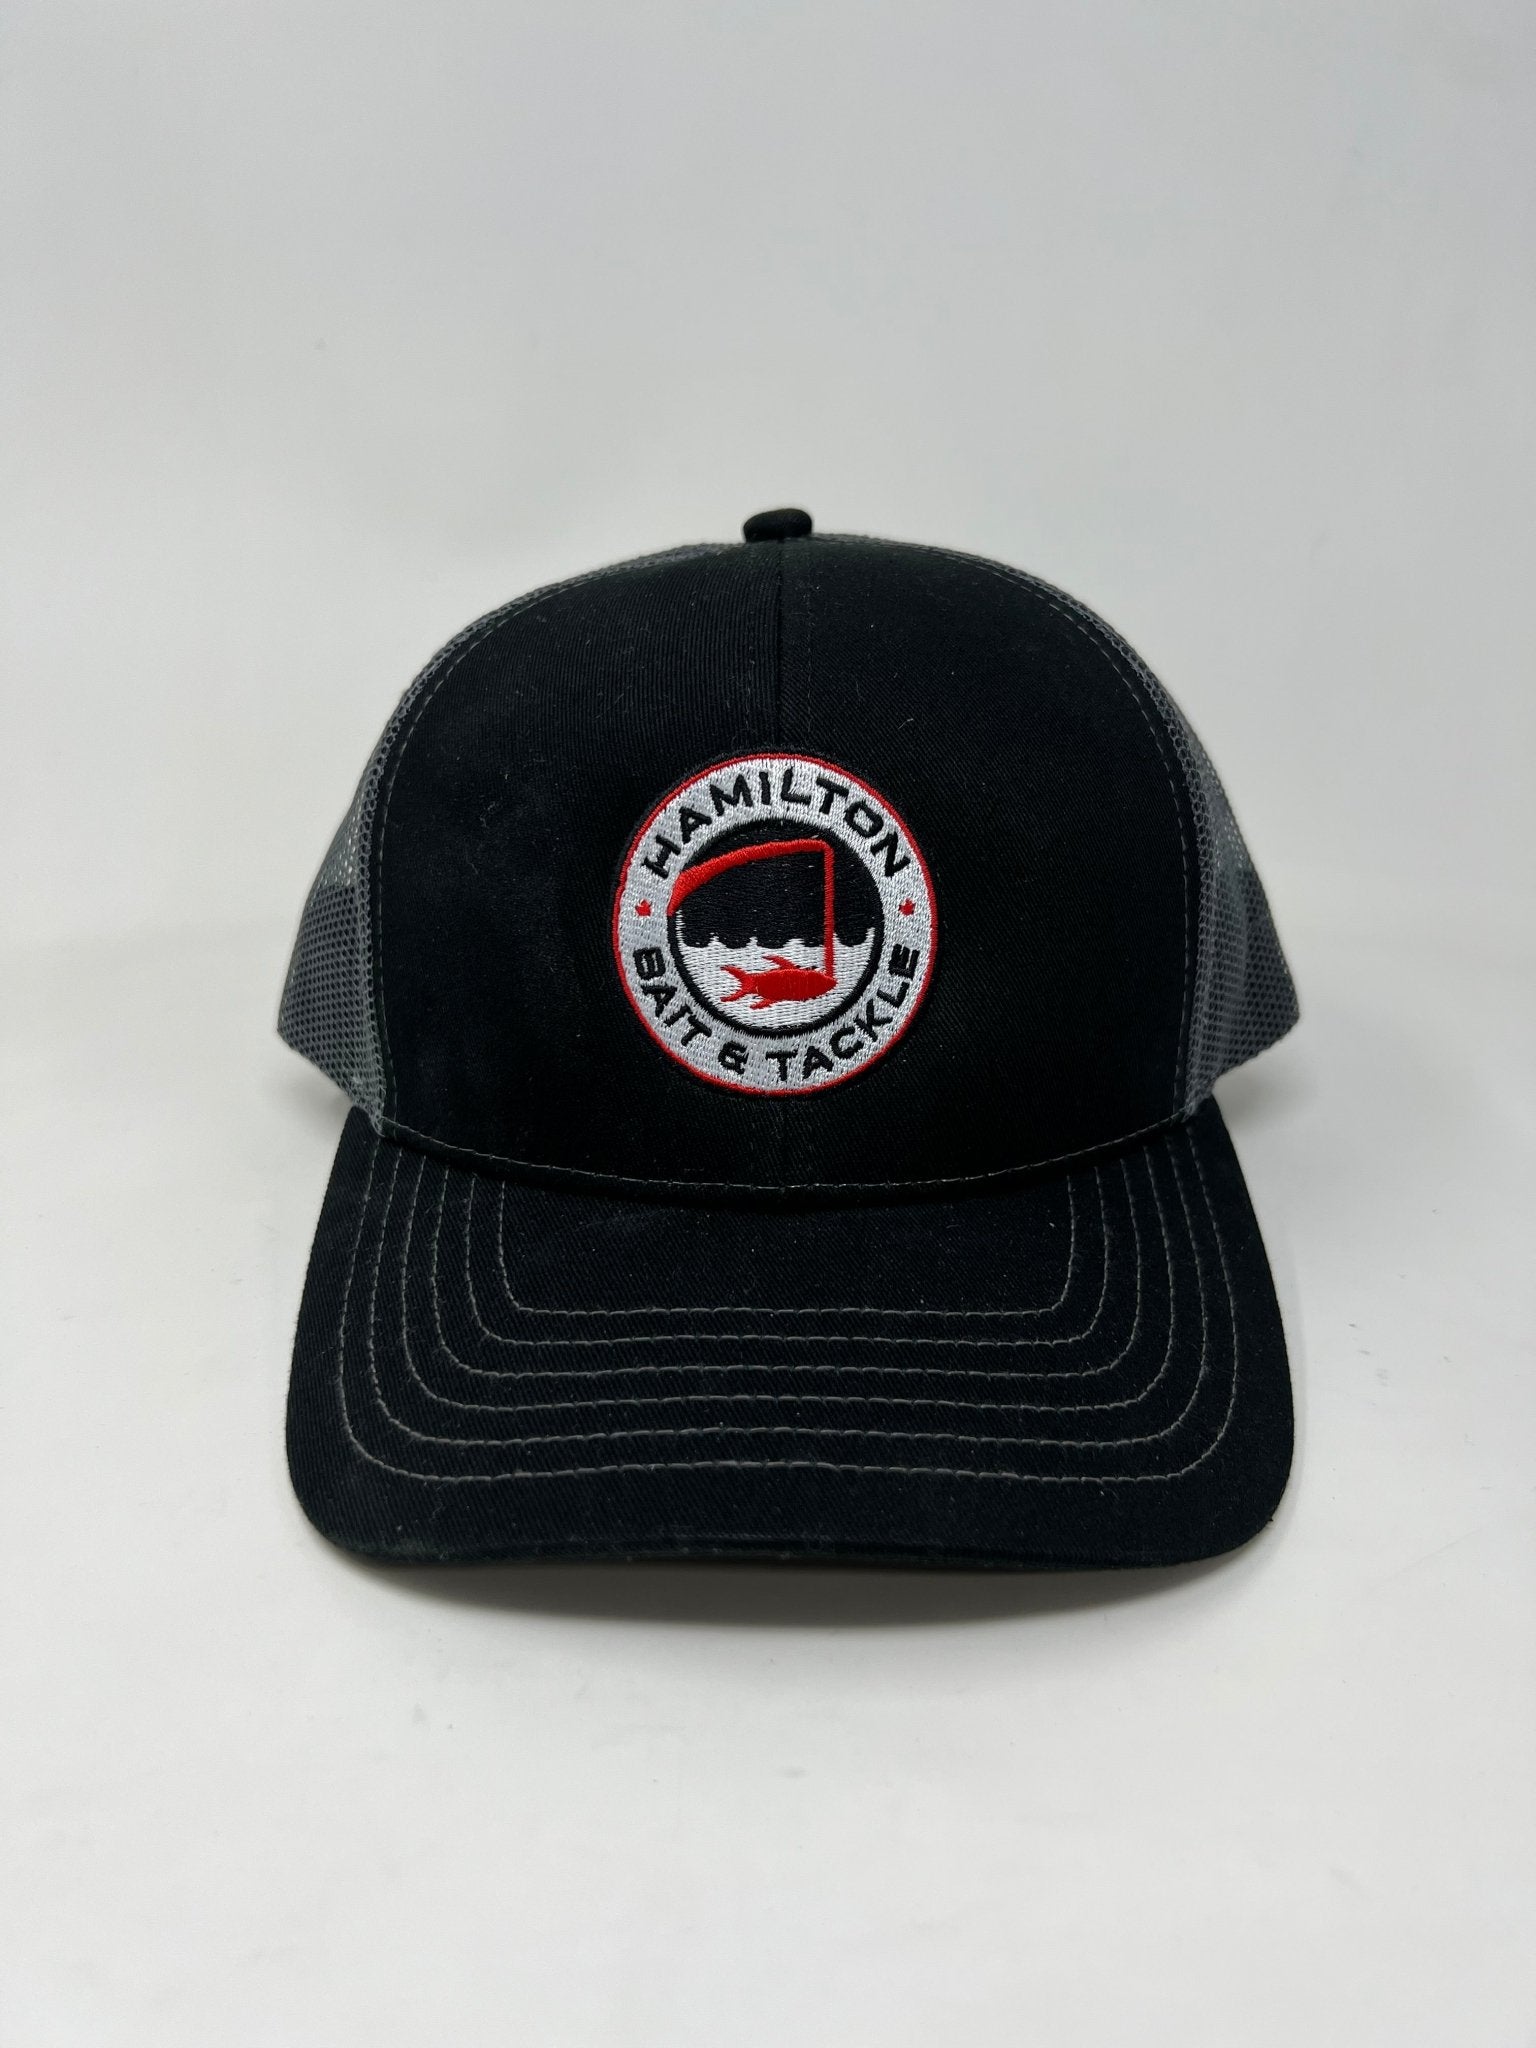 HBT Stitched Logo Hat - Hamilton Bait and Tackle